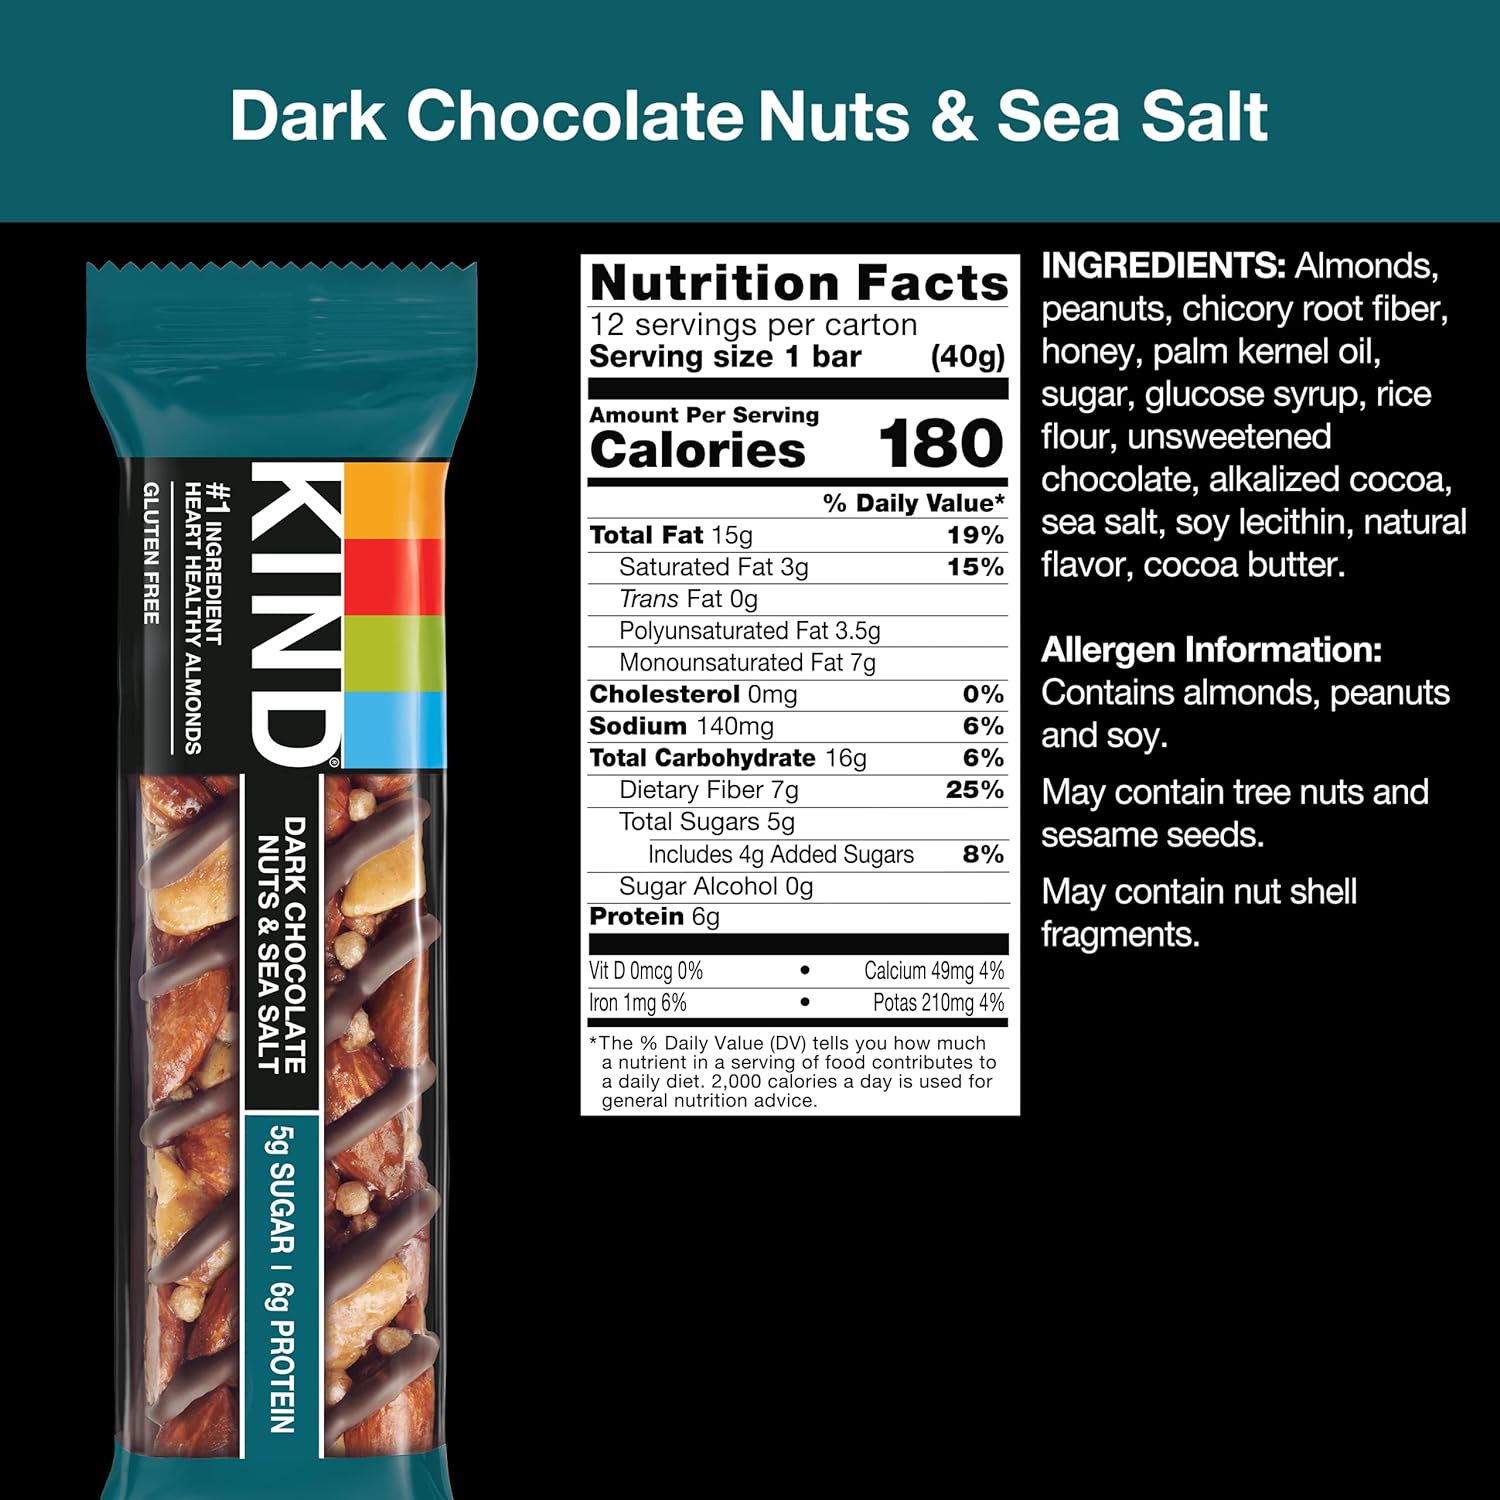 KIND Bars, Dark Chocolate Nuts and Sea Salt, Healthy Snacks, Gluten Free, Low Sugar, 6g Protein, 12 Count